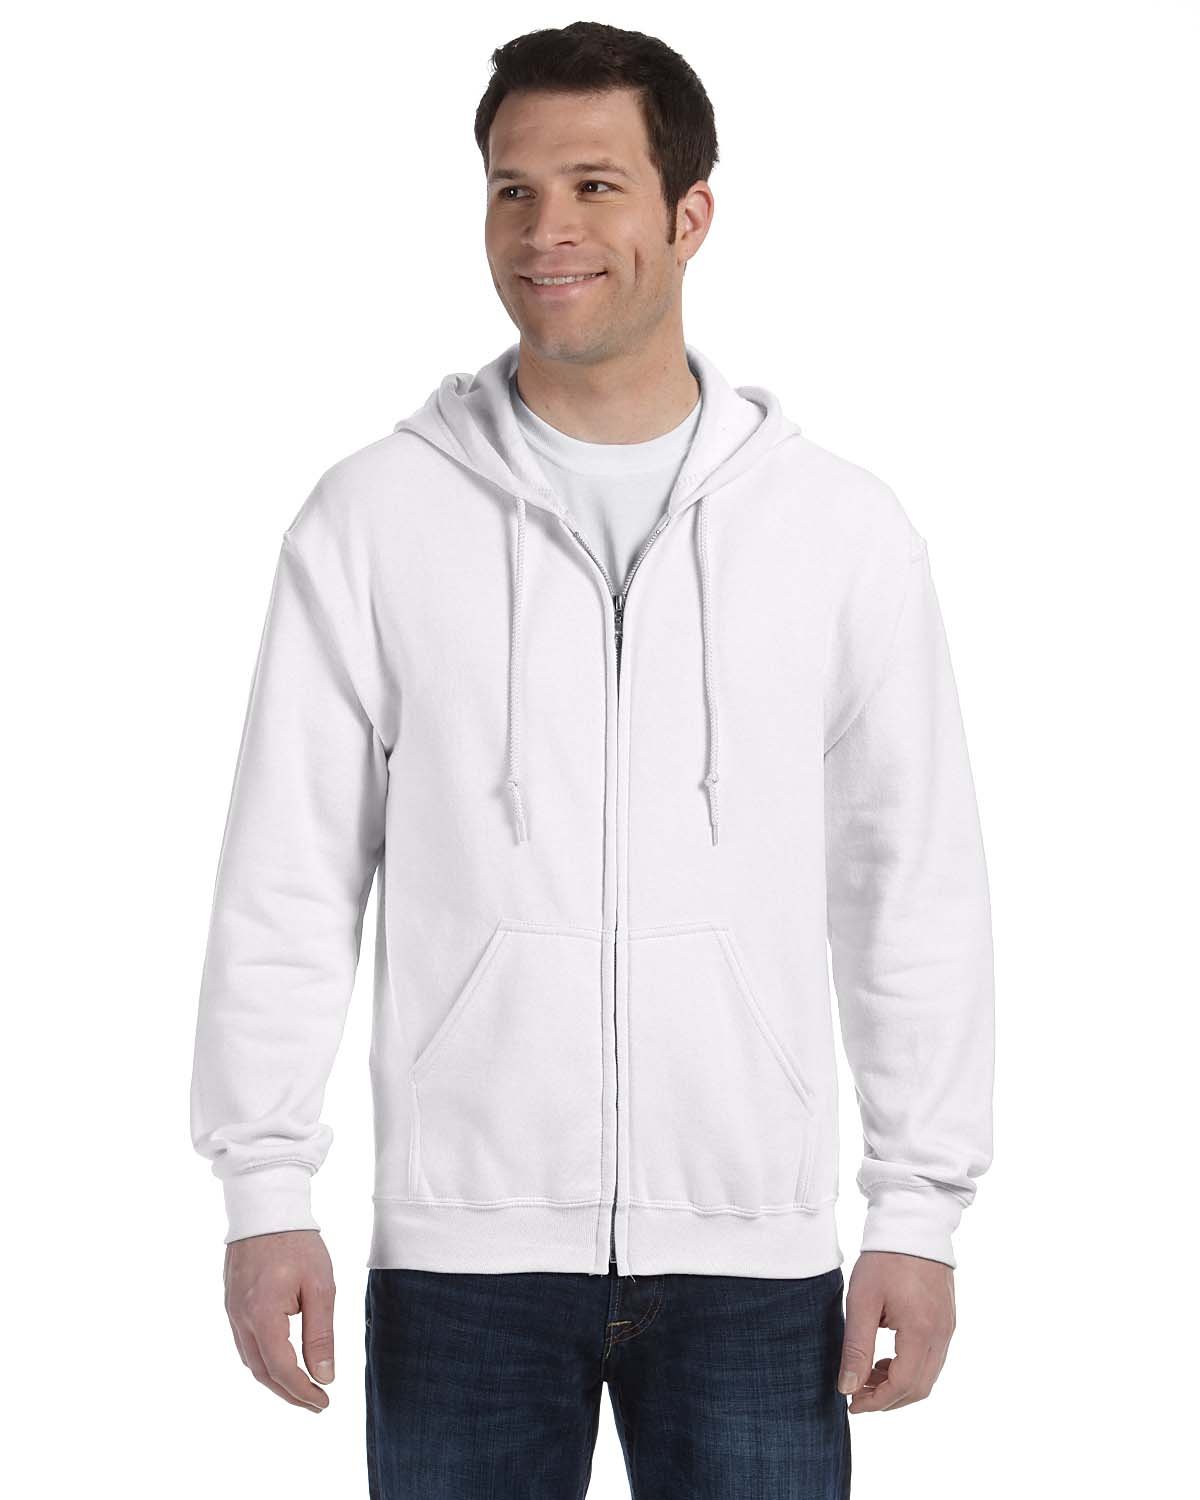 Gildan 18600 Size Chart, Gildan G186 Zipped Sweatshirt Size Table, Hooded  Full Zip Size Guide 